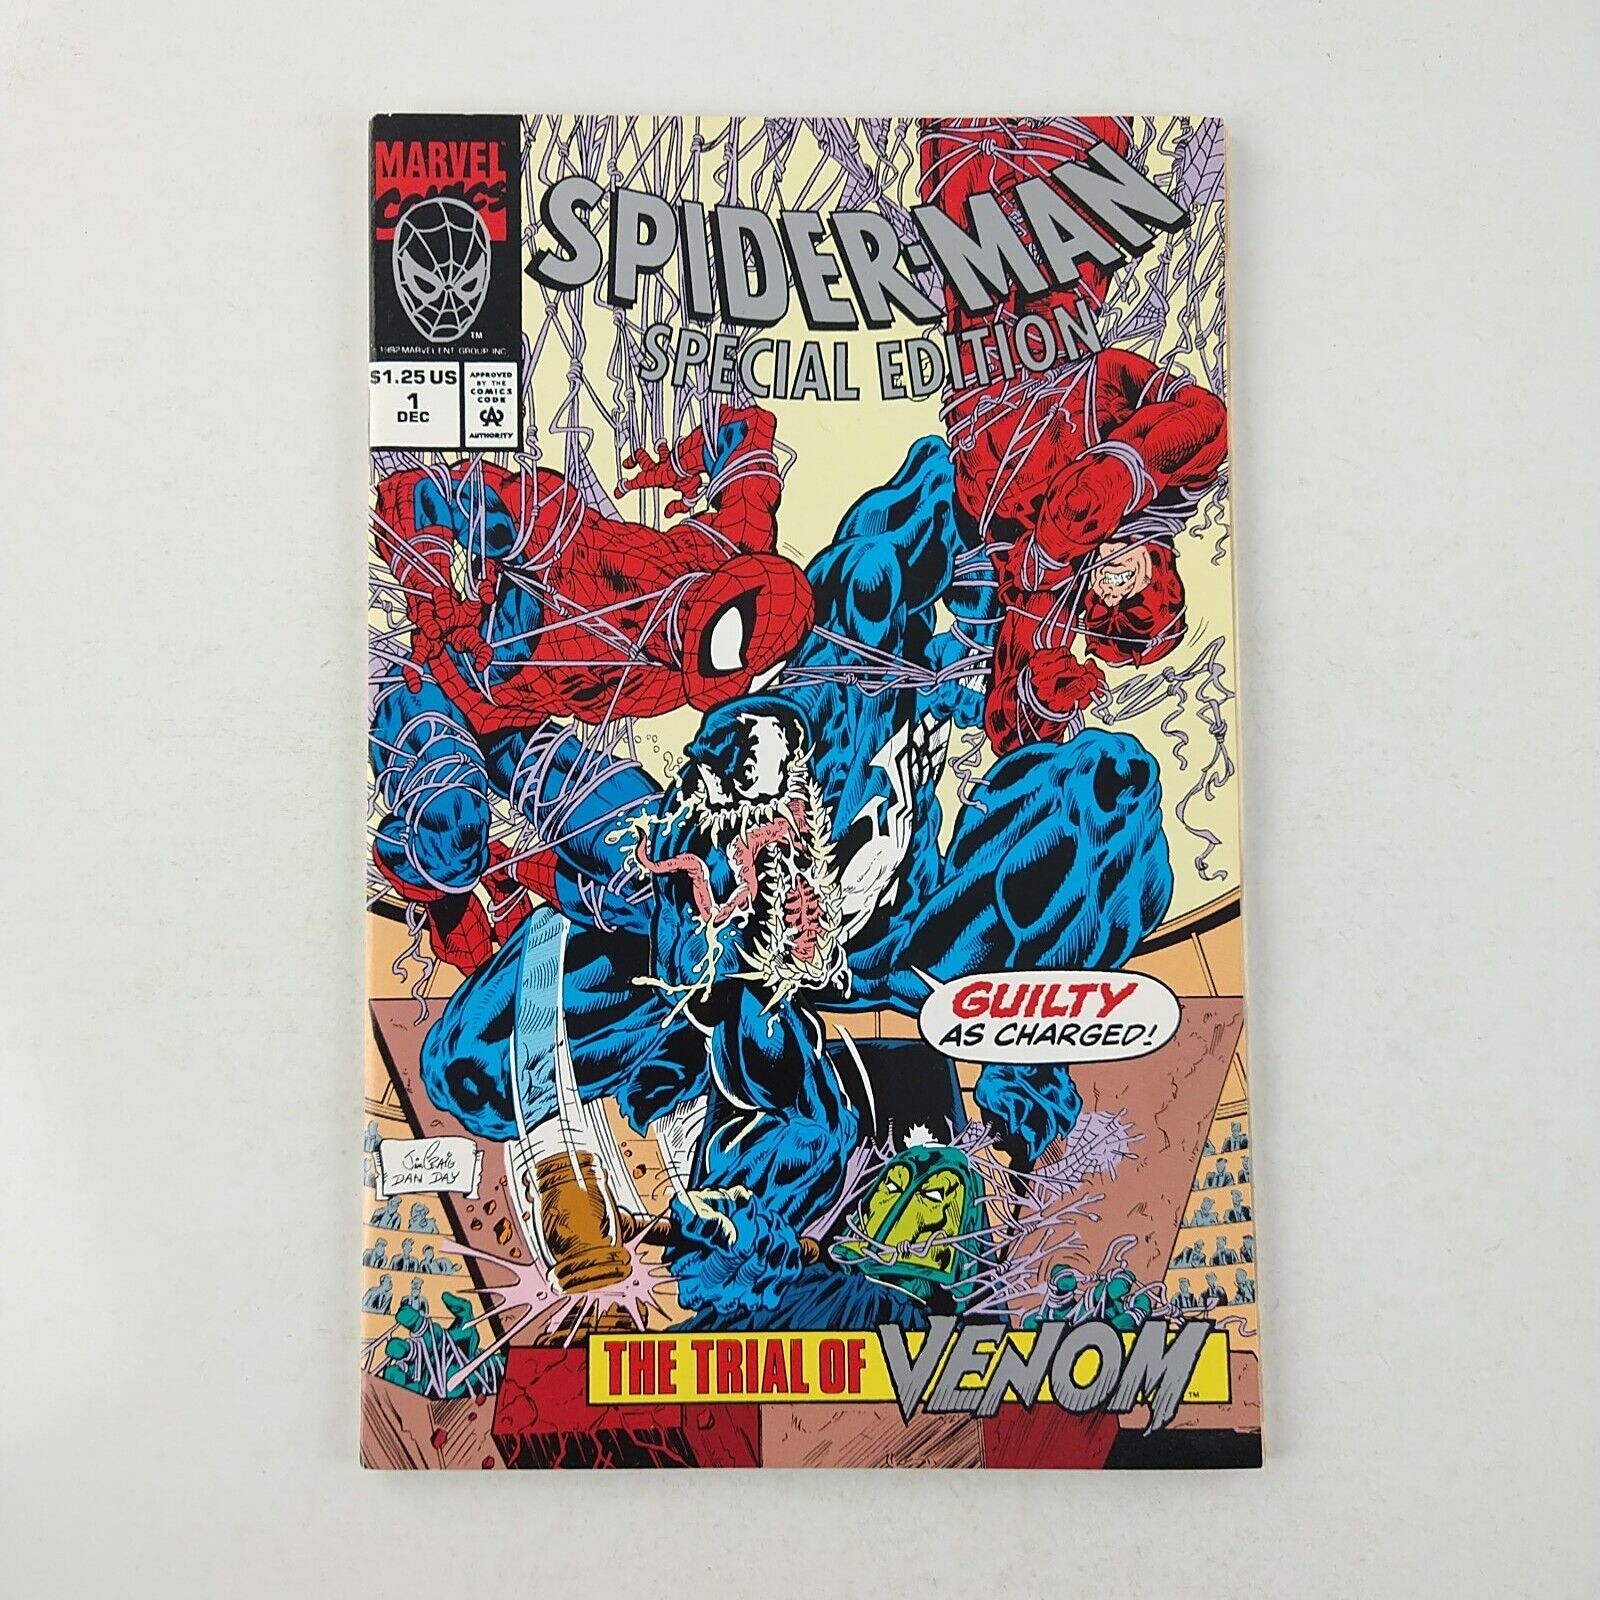 Spider-Man Special Edition #1 The Trial Of Venom (1992 Marvel Comics)